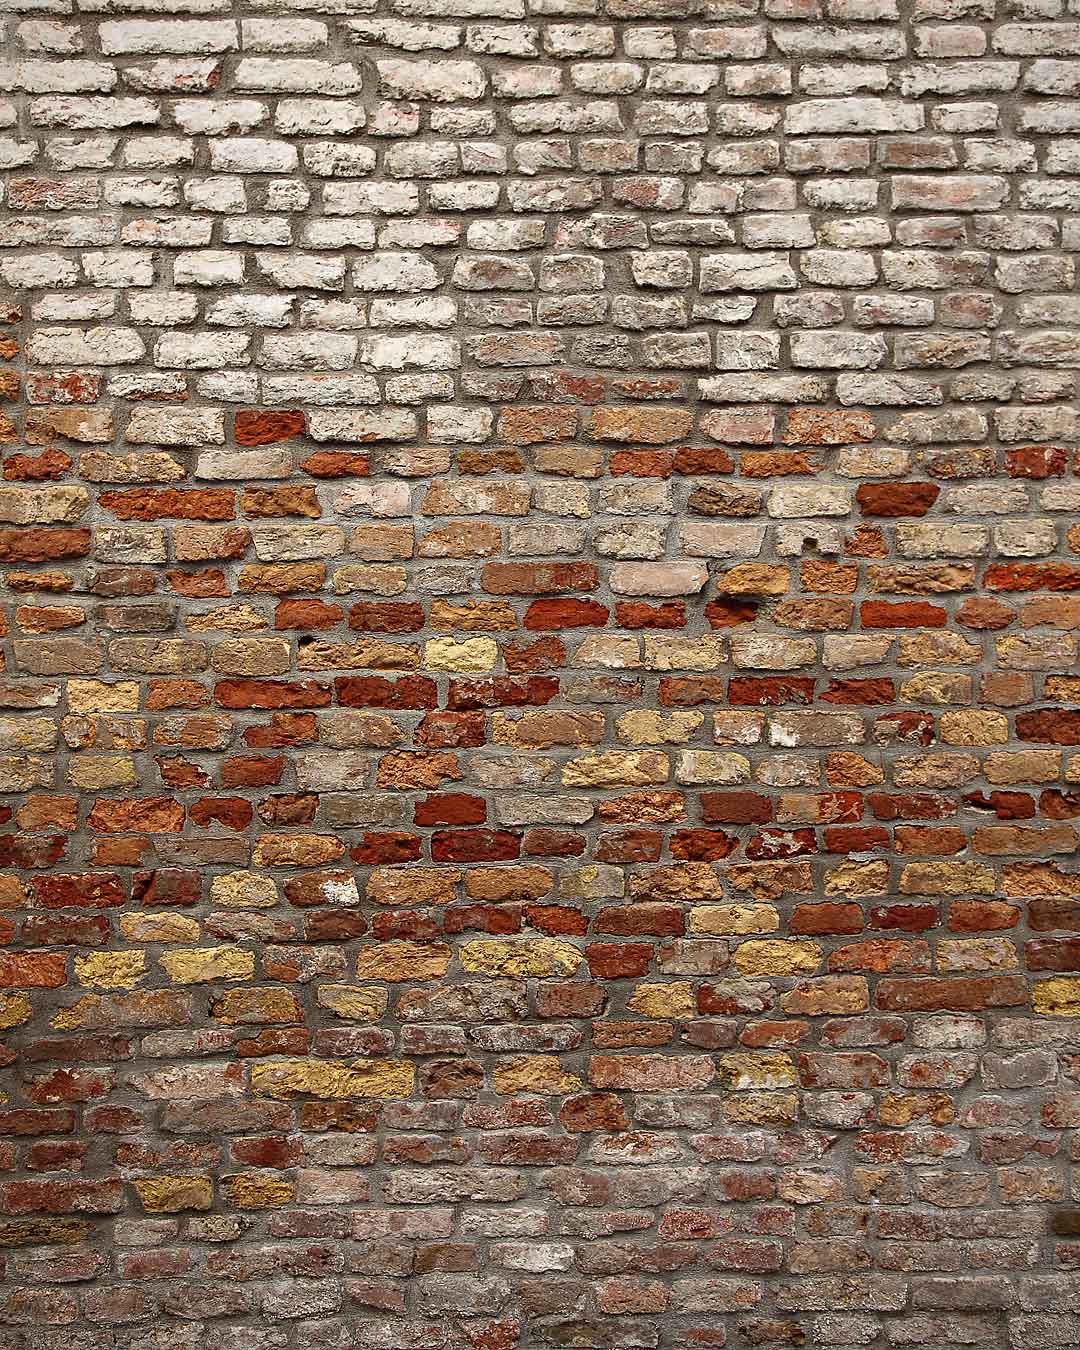 Brickwork, Venice, Italy, 2008